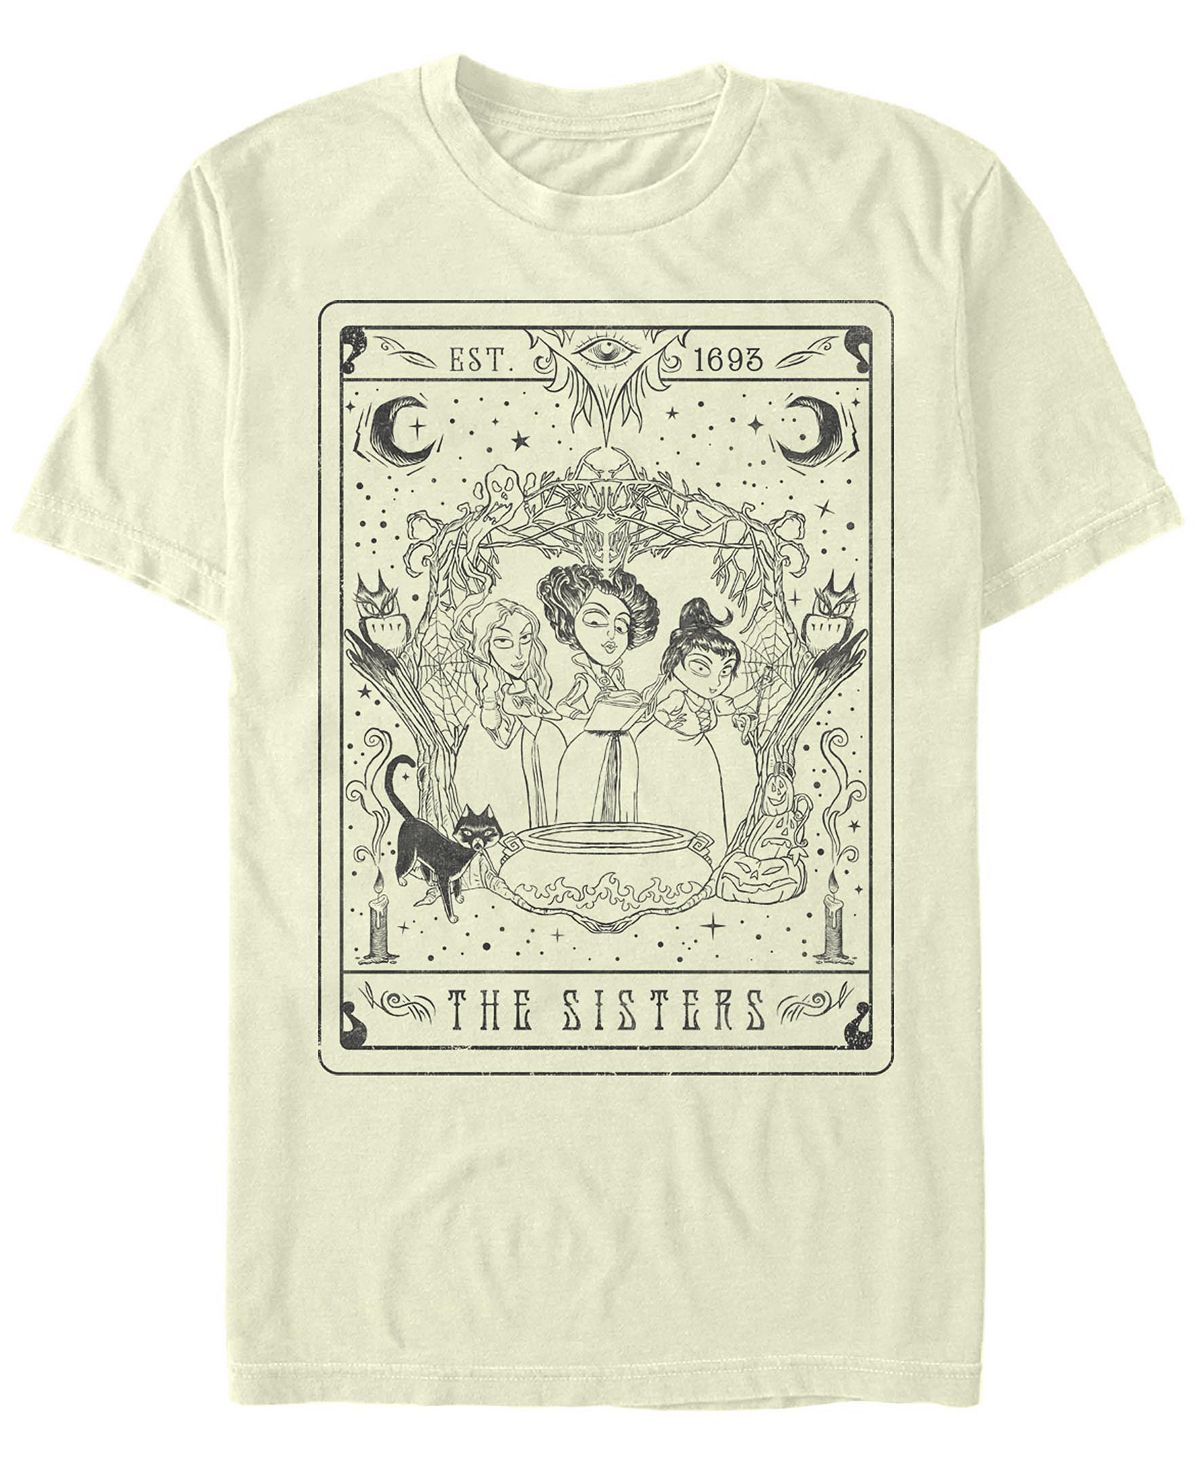 Мужская футболка с коротким рукавом hocus pocus the sisters tarot Fifth Sun